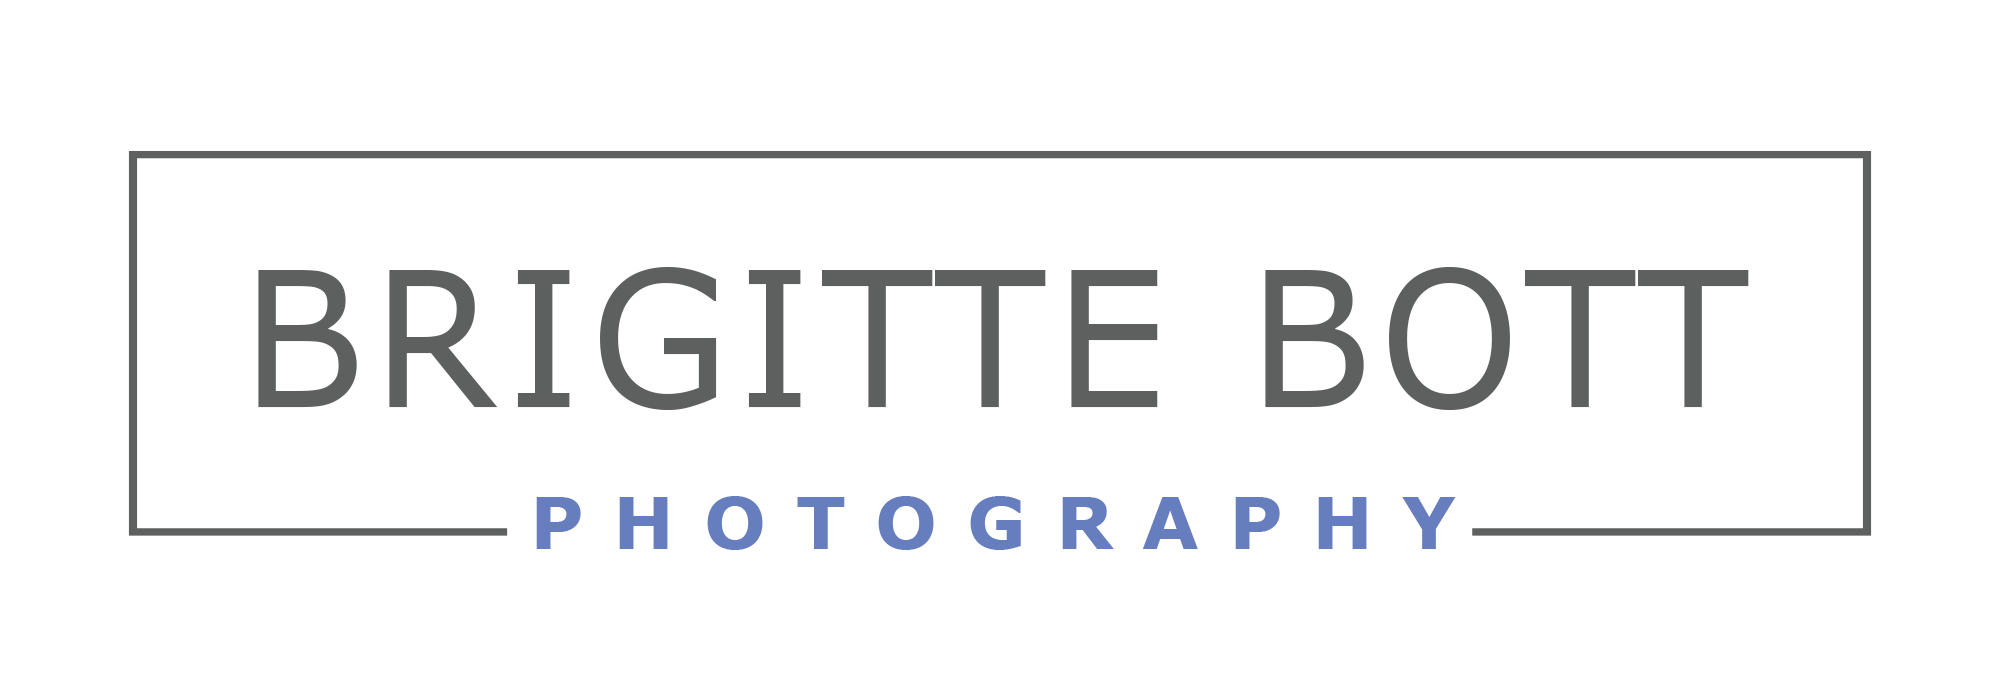 Brigitte Bott Photography